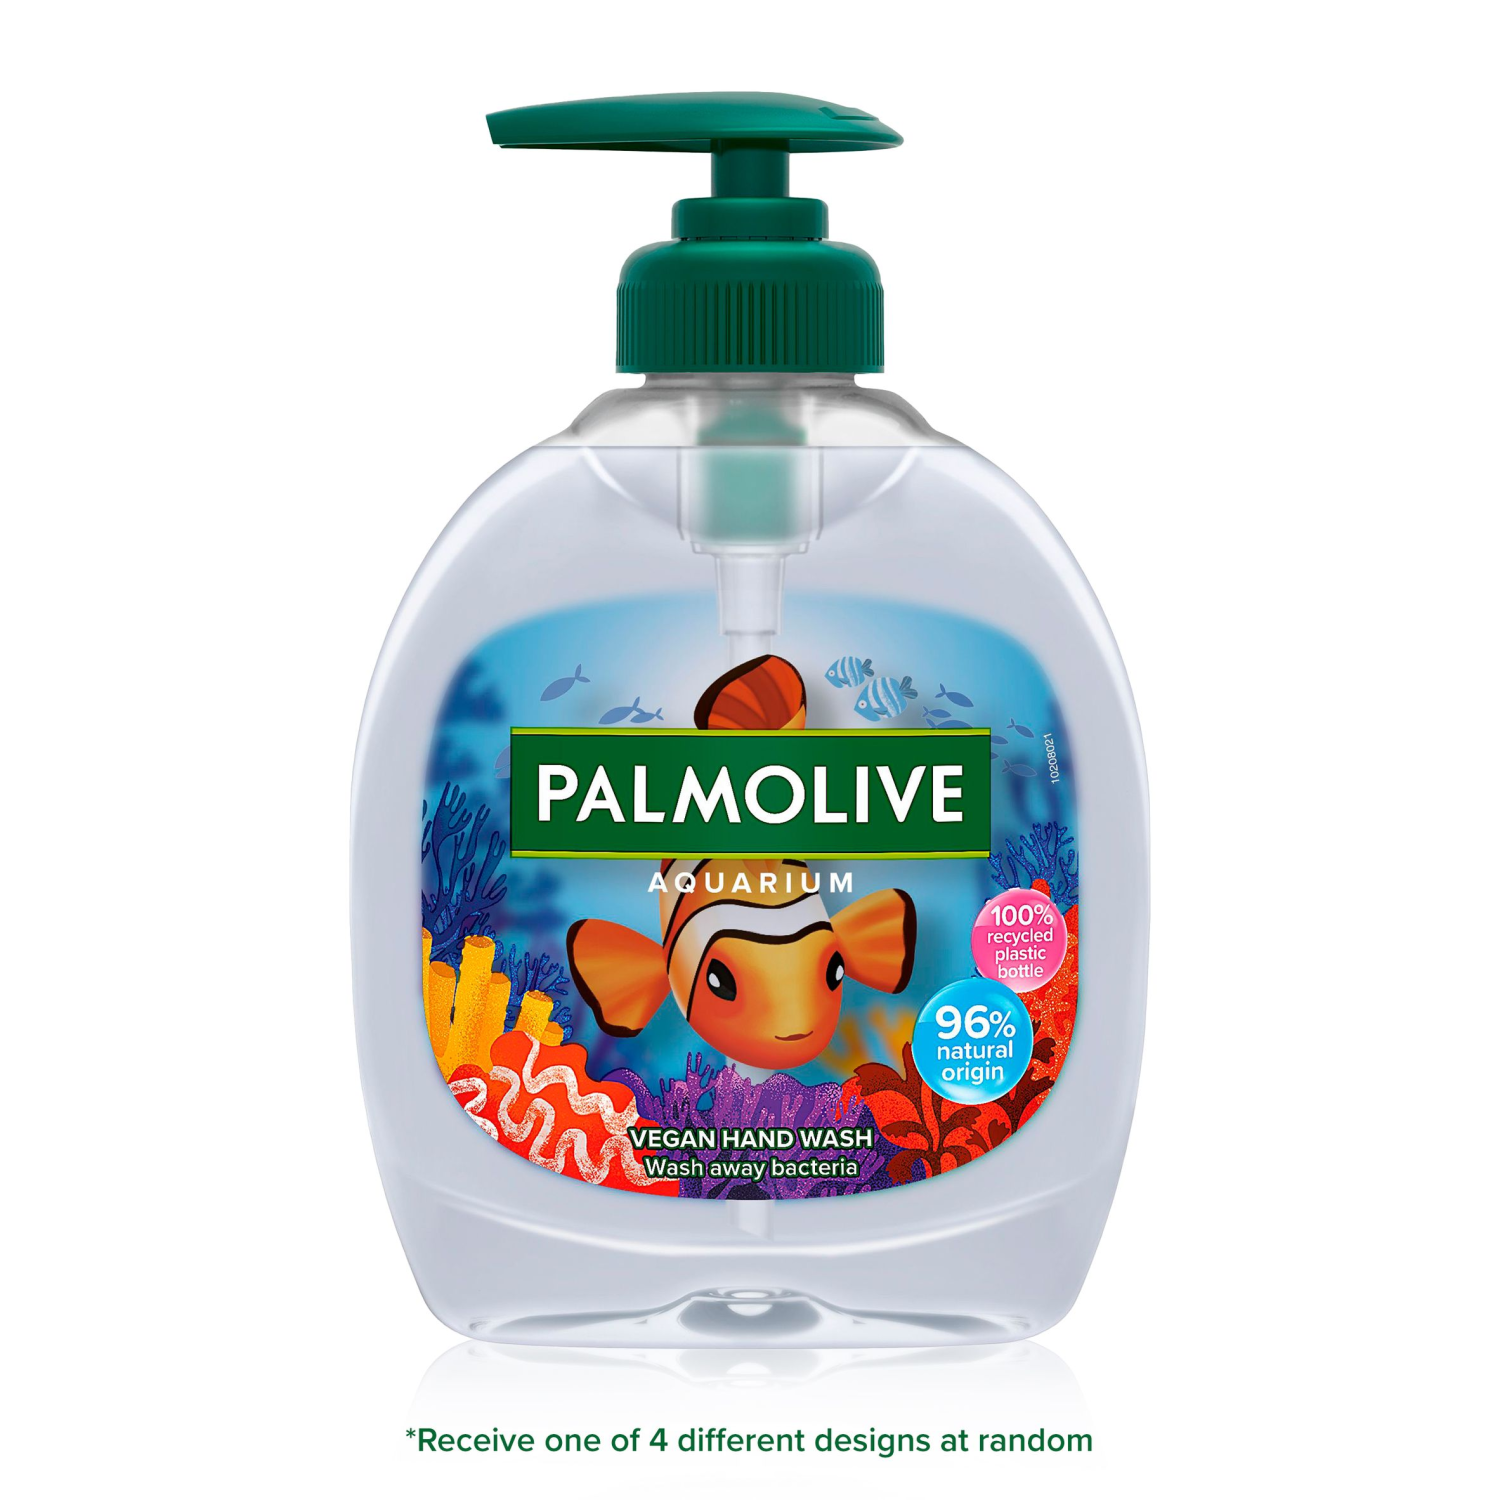 Palmolive Liquid Hand Soap 300ml Aquarium